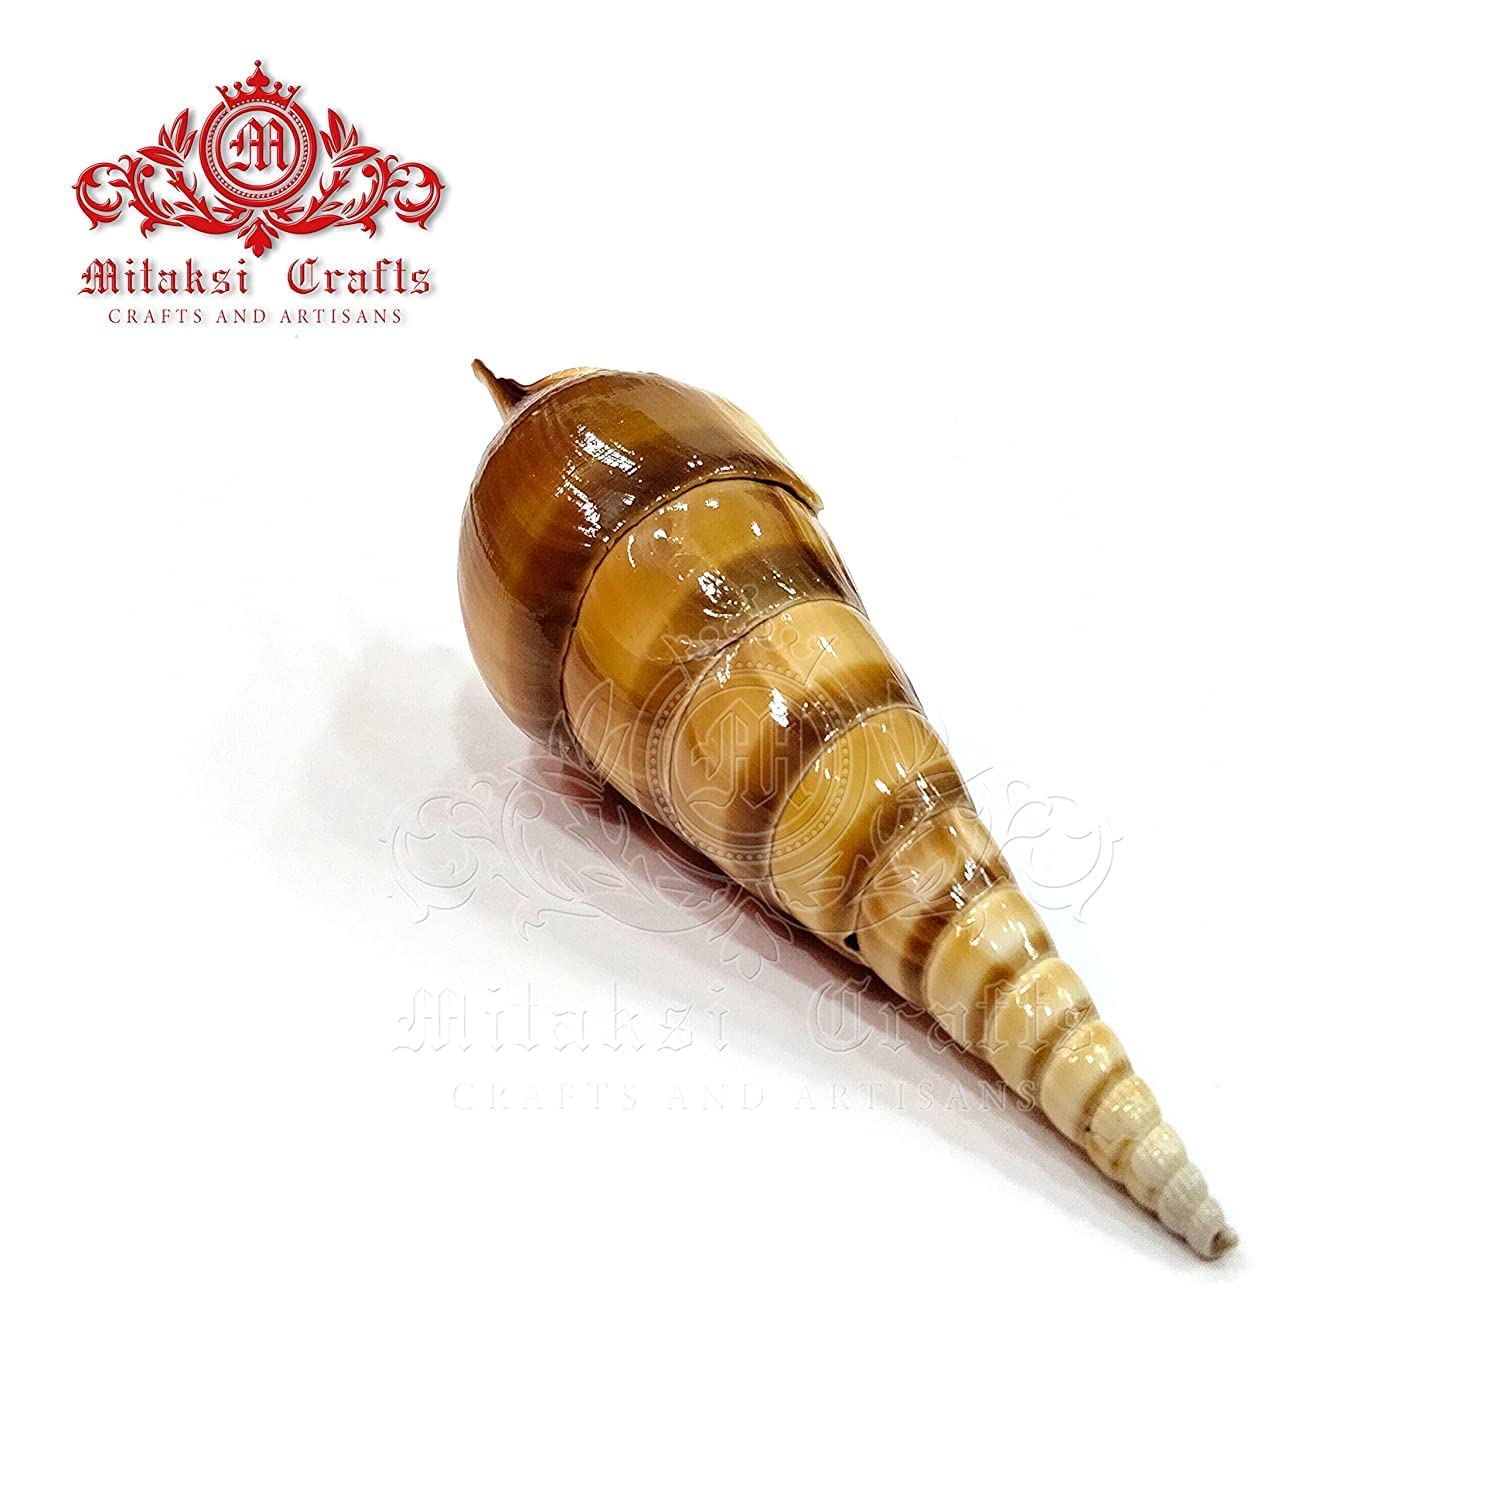 Seashell Ezhuthani -True Cochs -Tibia Curta- Arts and Crafts Making - Pack of 10